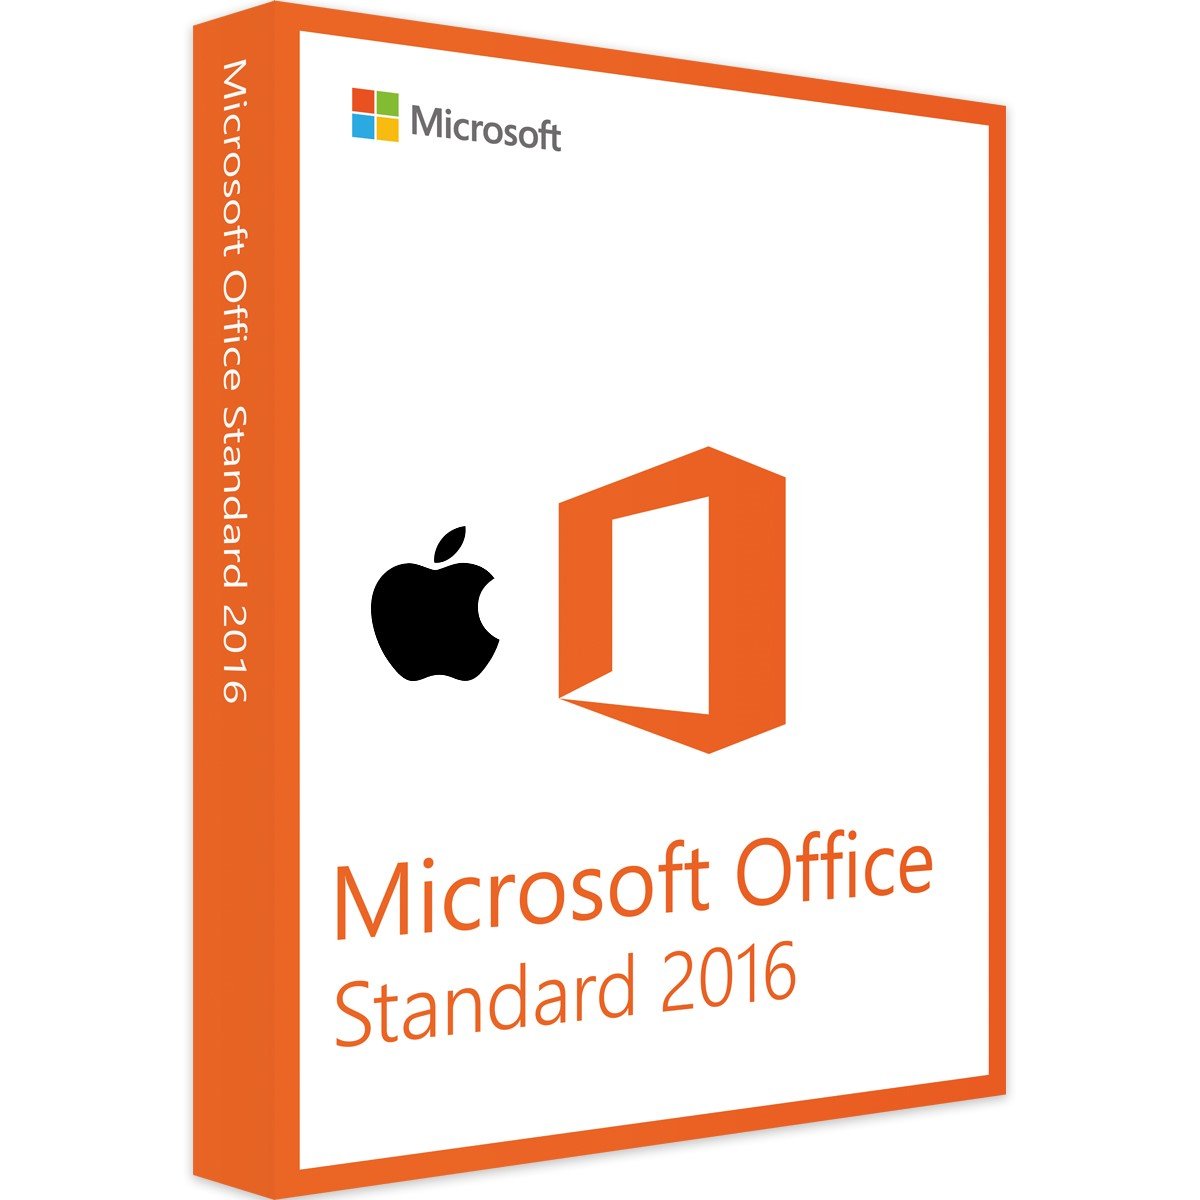 Microsoft Office Standard 2016 für Mac als USB-Stick